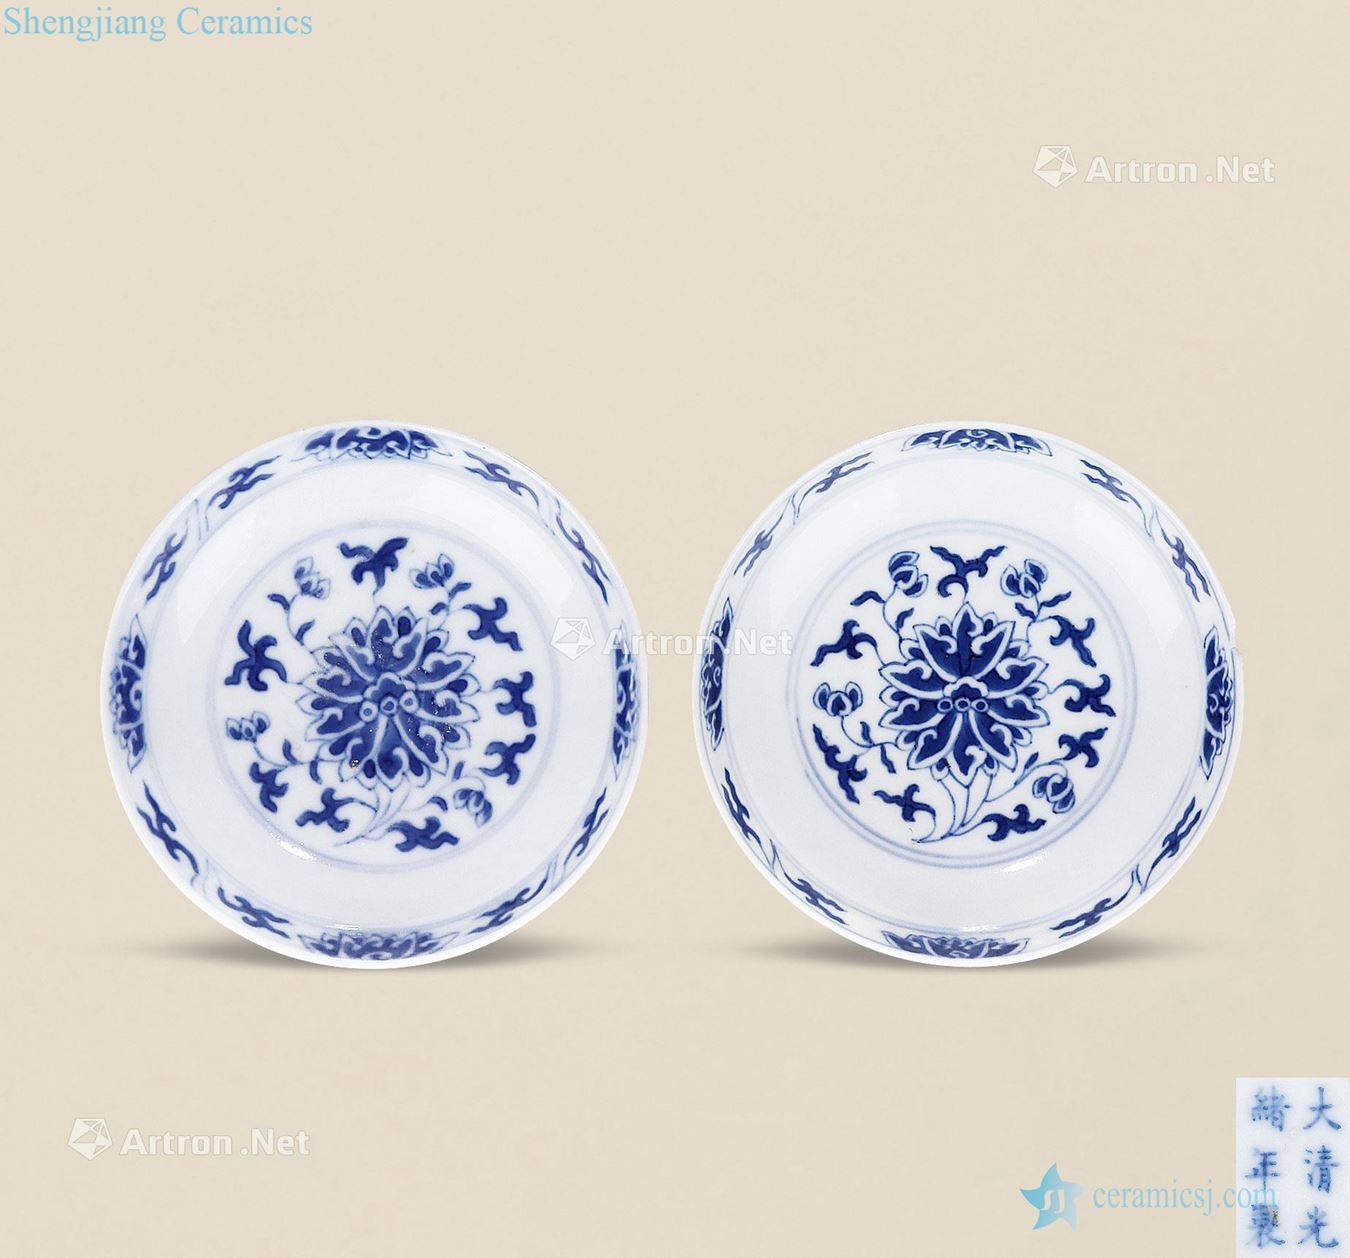 Qing guangxu Blue and white lotus design tray (a)